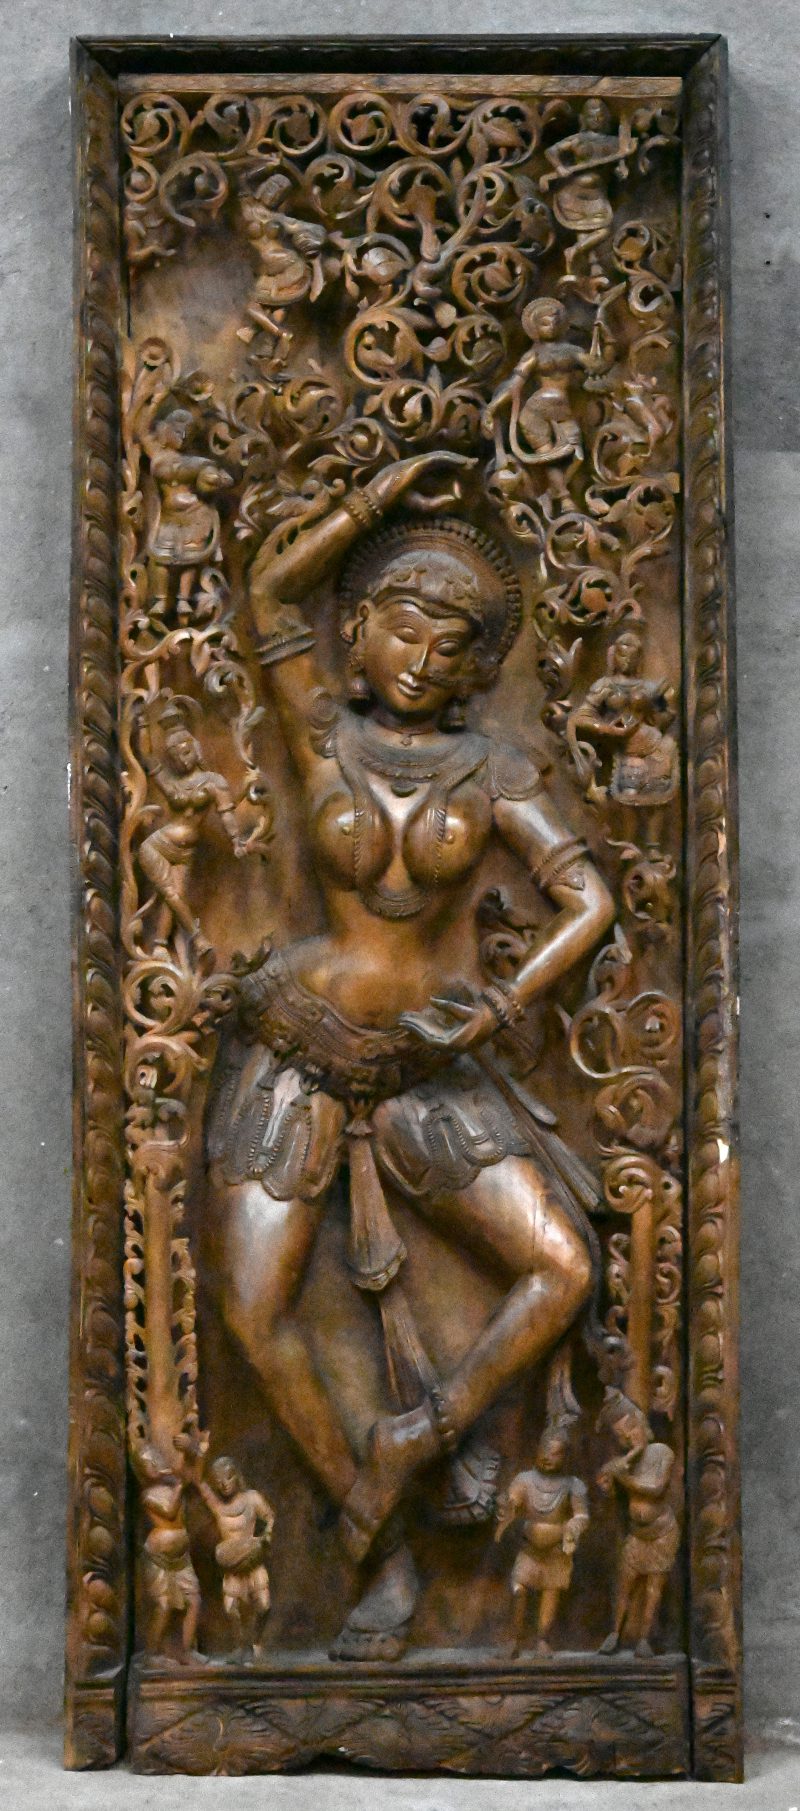 Thaïse basreliëf met dansende shiva.